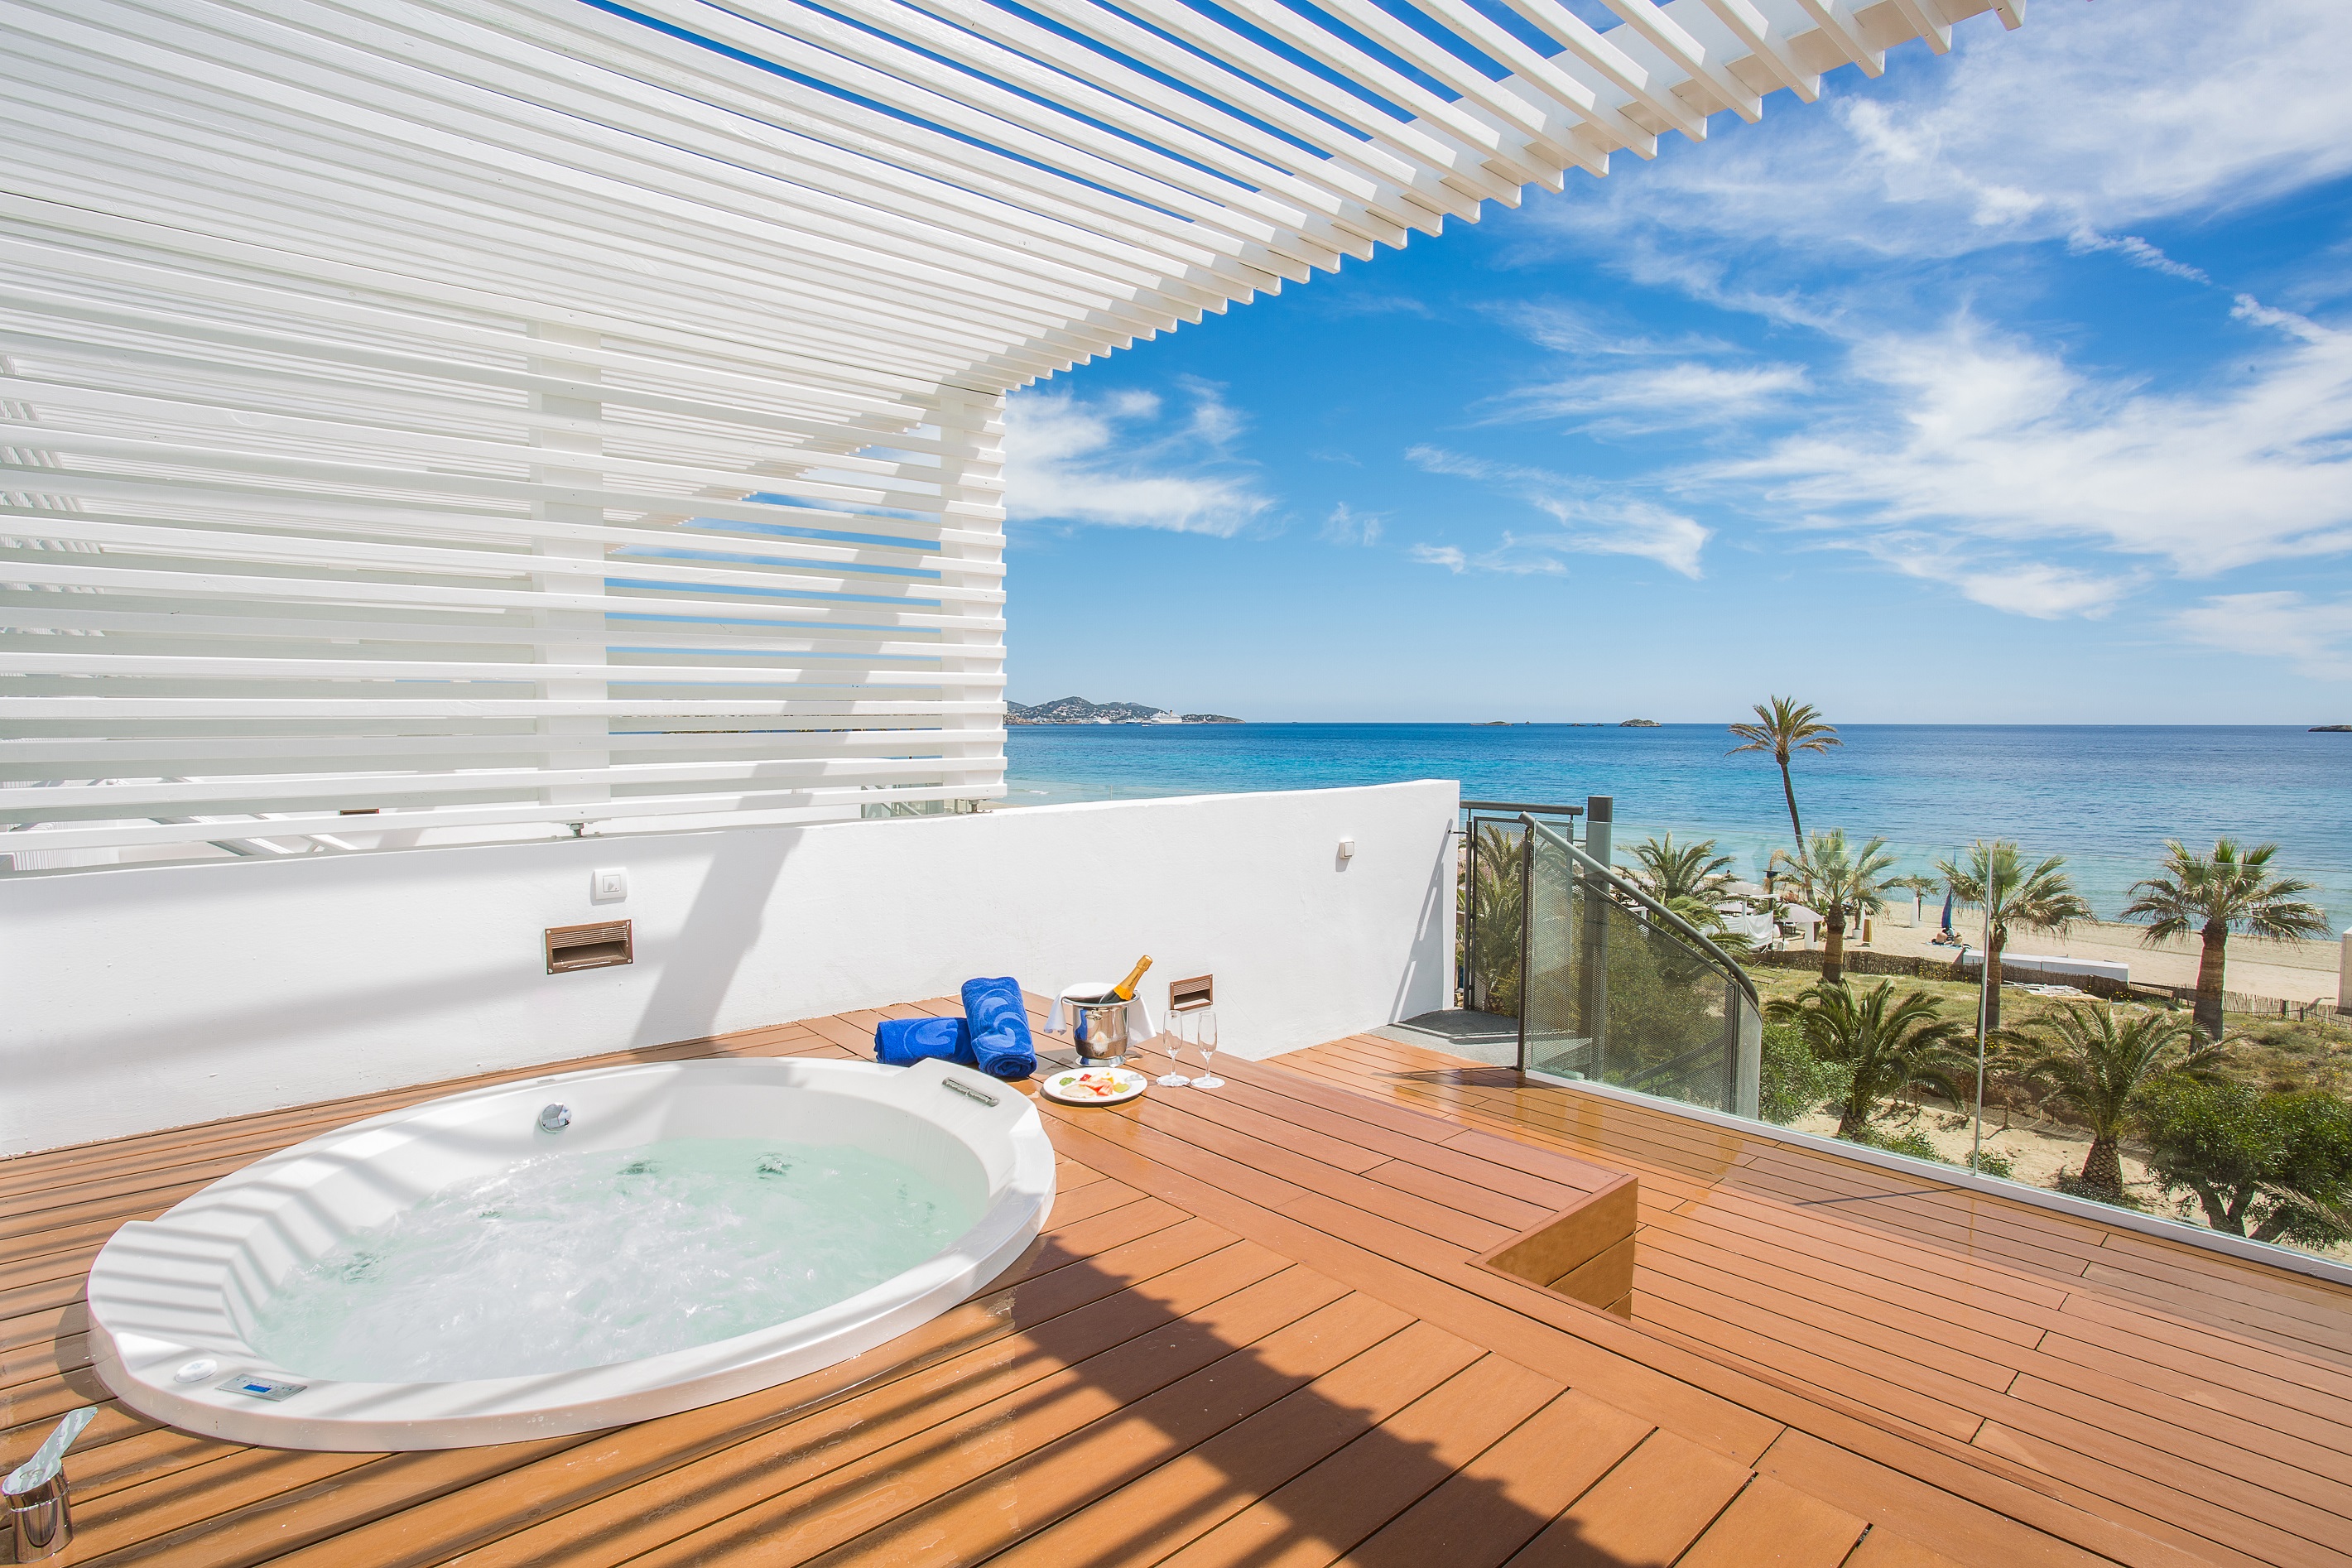 Palladium Hotel Group kicks off the summer season in Ibiza with New